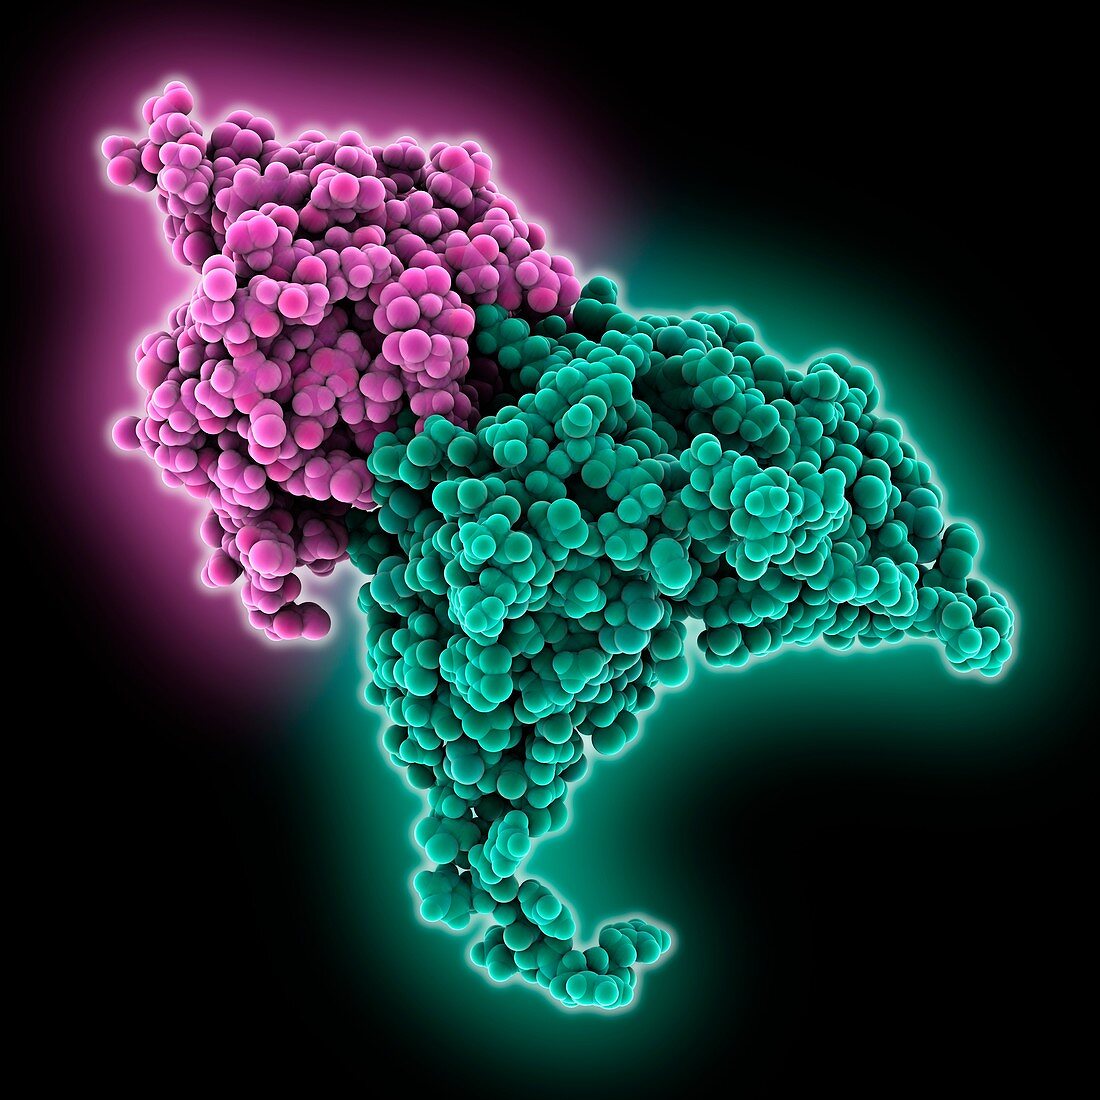 Antibody-interleukin complex, molecular model